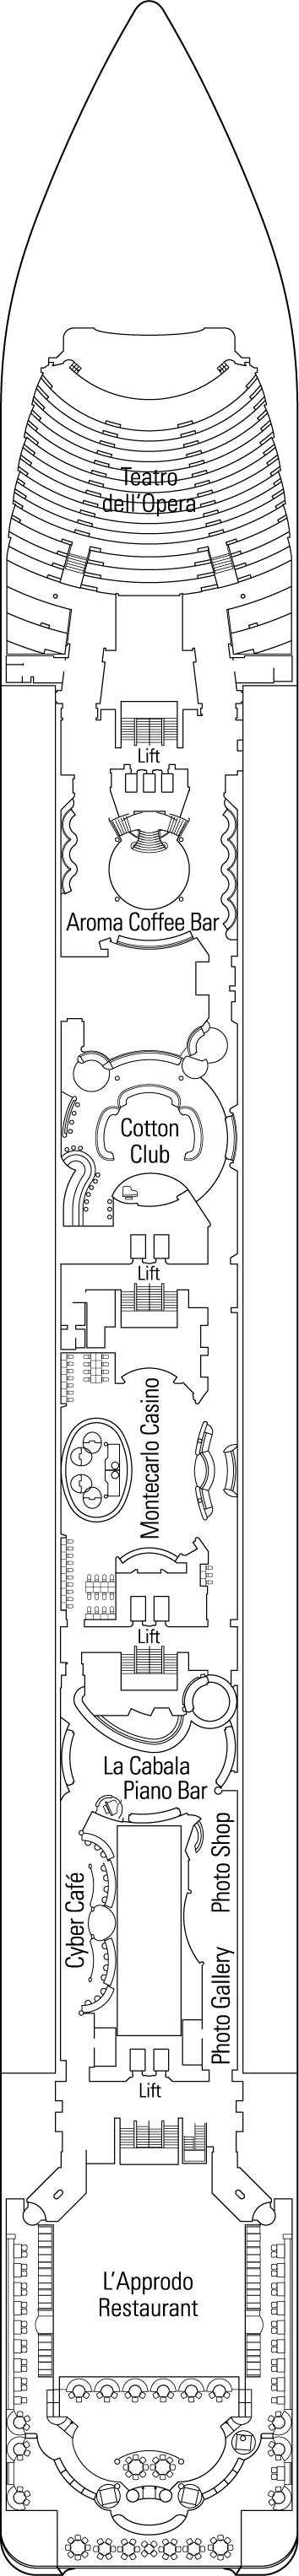 Otello Deck Plan